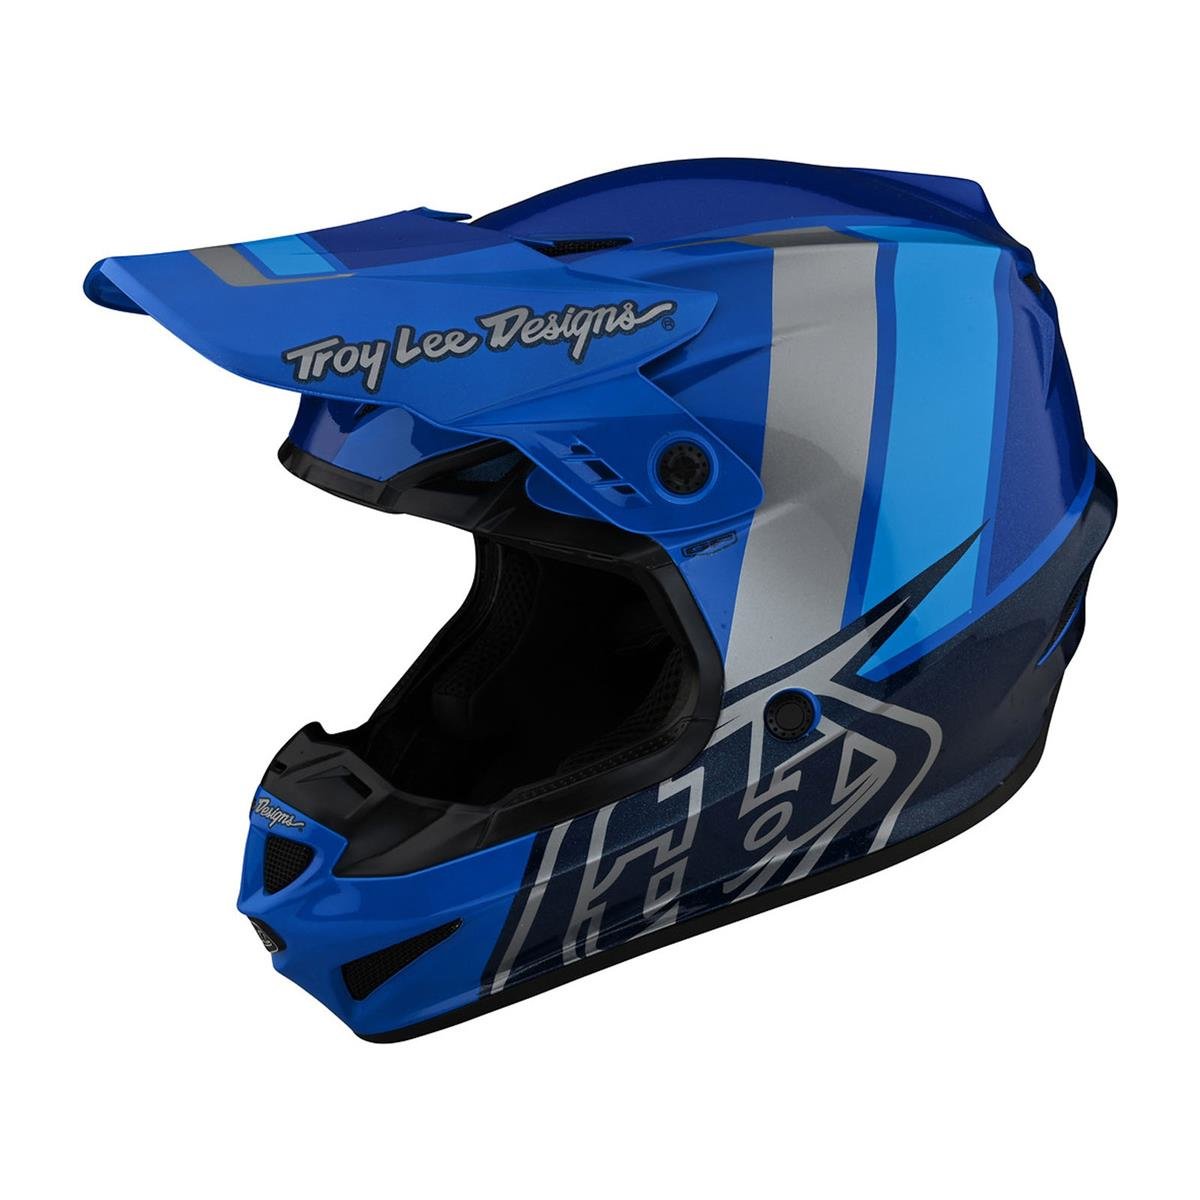 Troy Lee Designs GP Helm- Nova- blue- L - 58-59cm